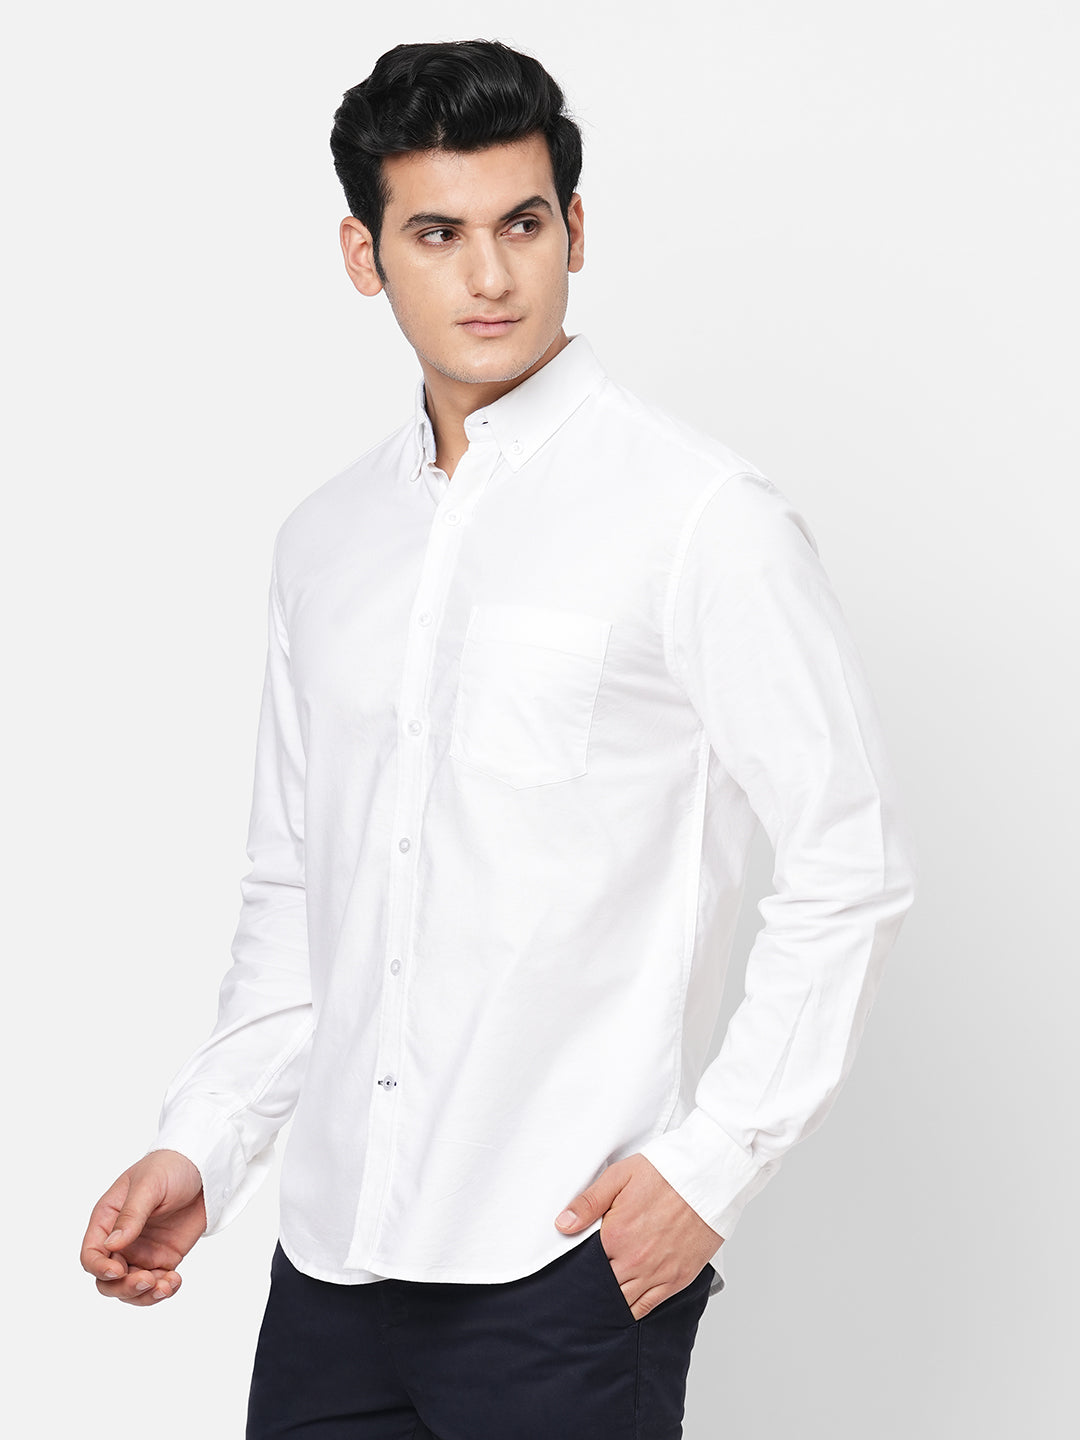 Men's Oxford Cotton Button down Collar Long Sleeved Shirt - White